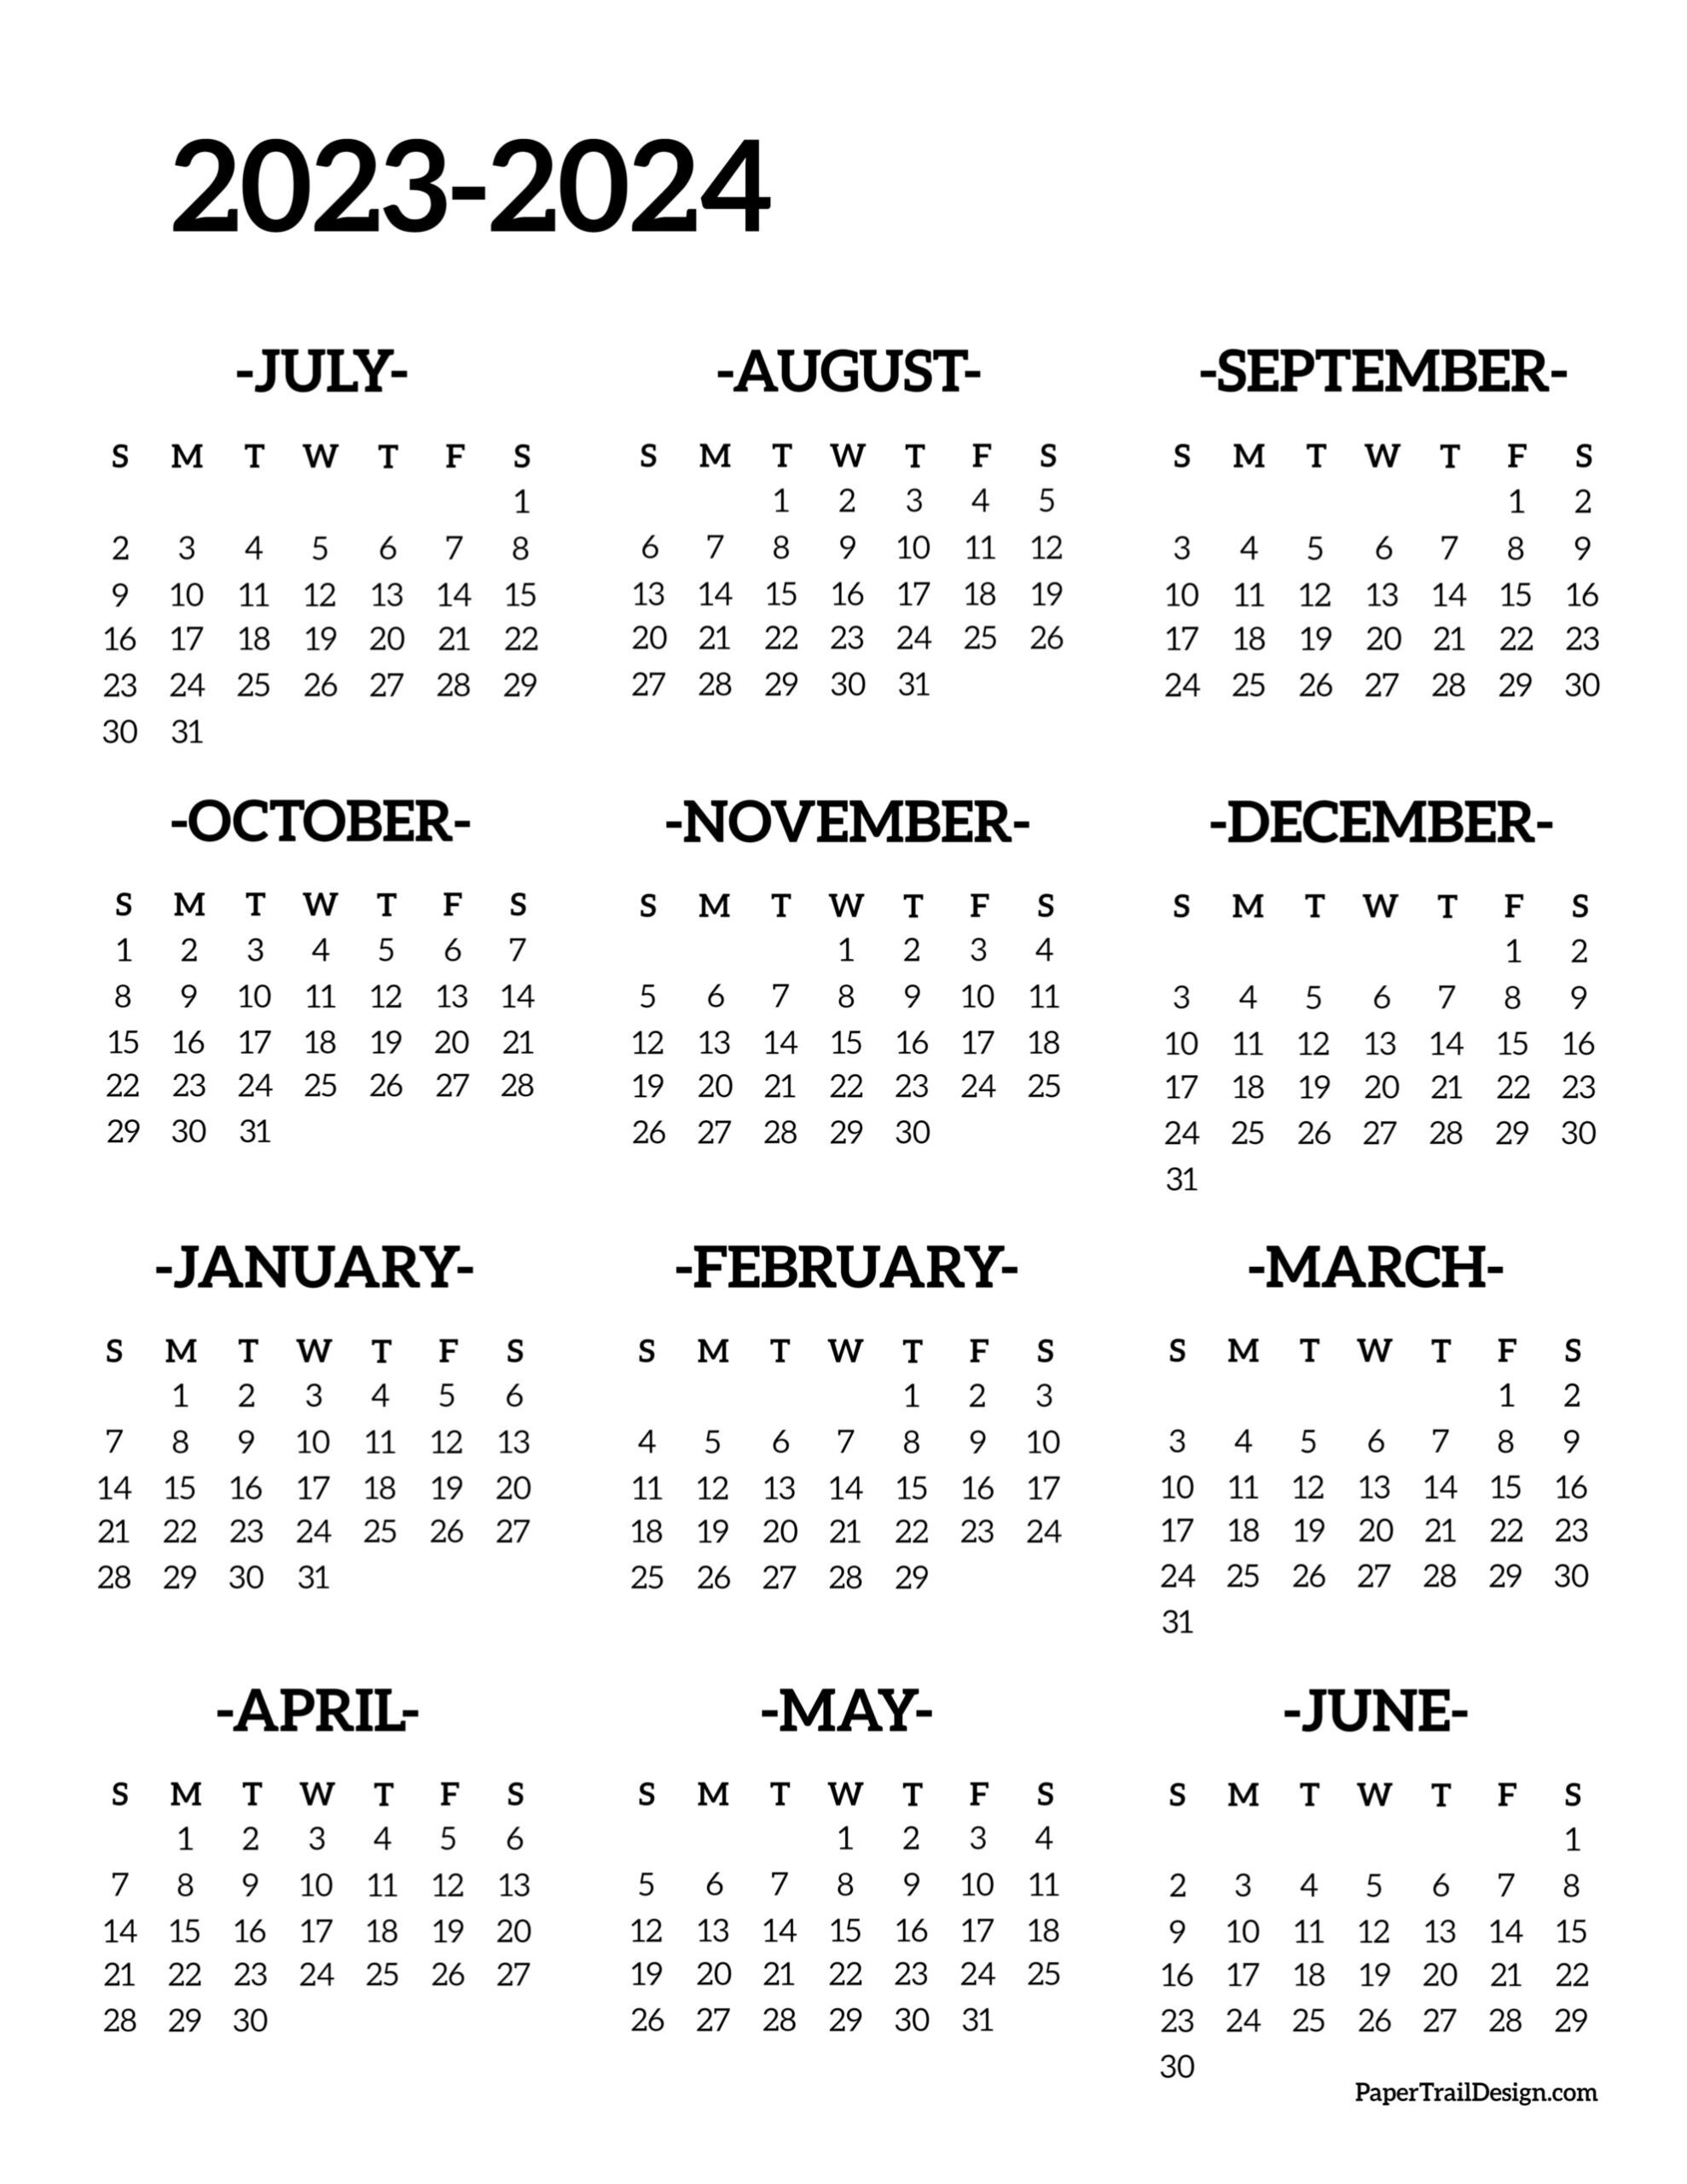 2023-2024 School Year Calendar Free Printable - Paper Trail Design | Printable Calendar For 2023 2024